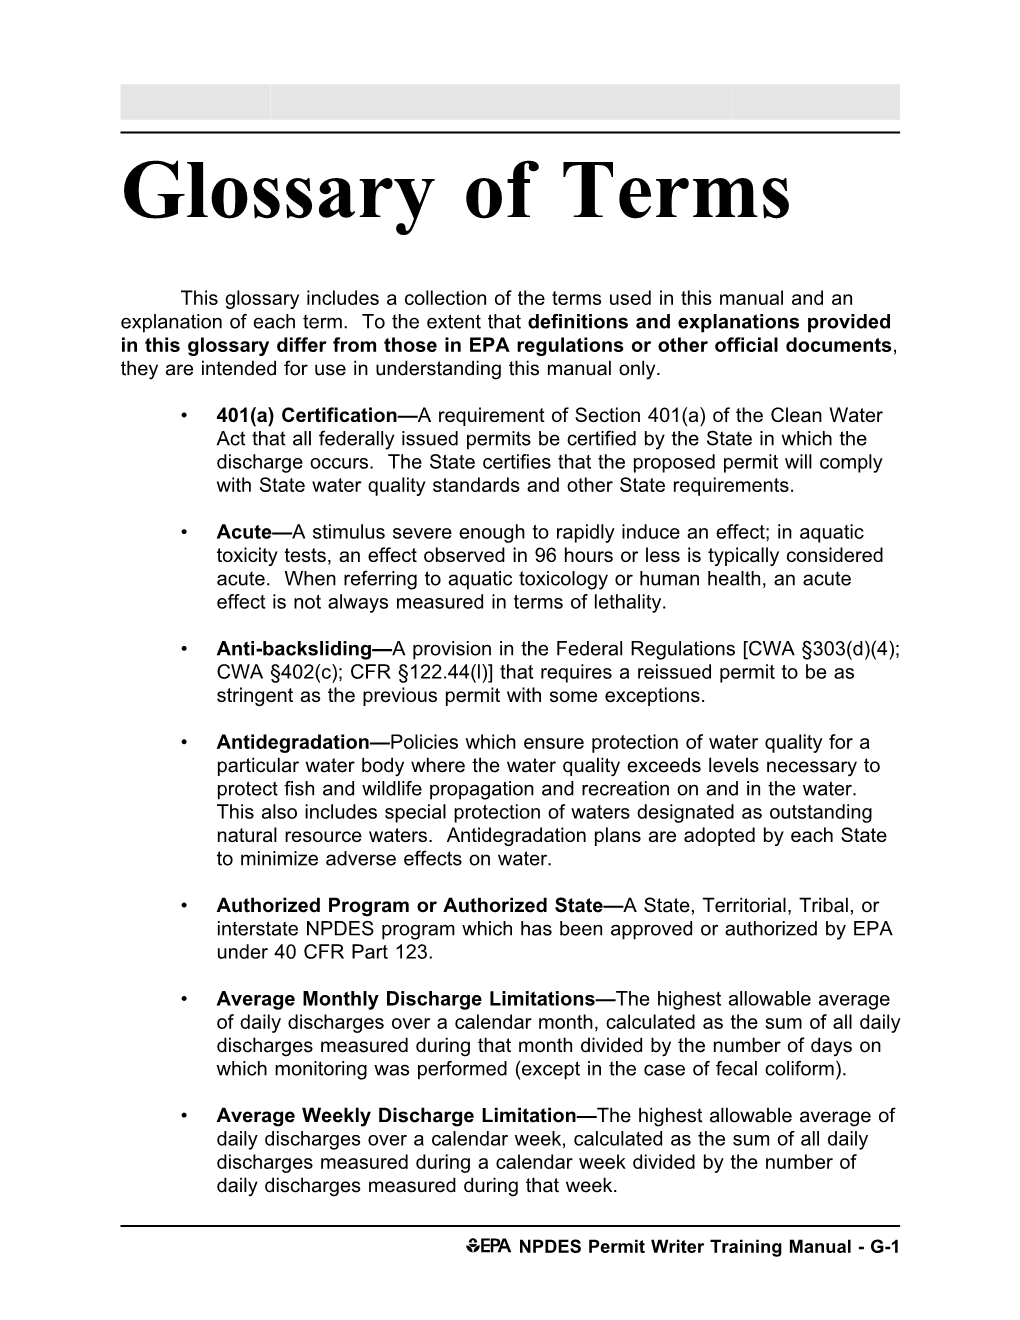 EPA Glossary of Terms